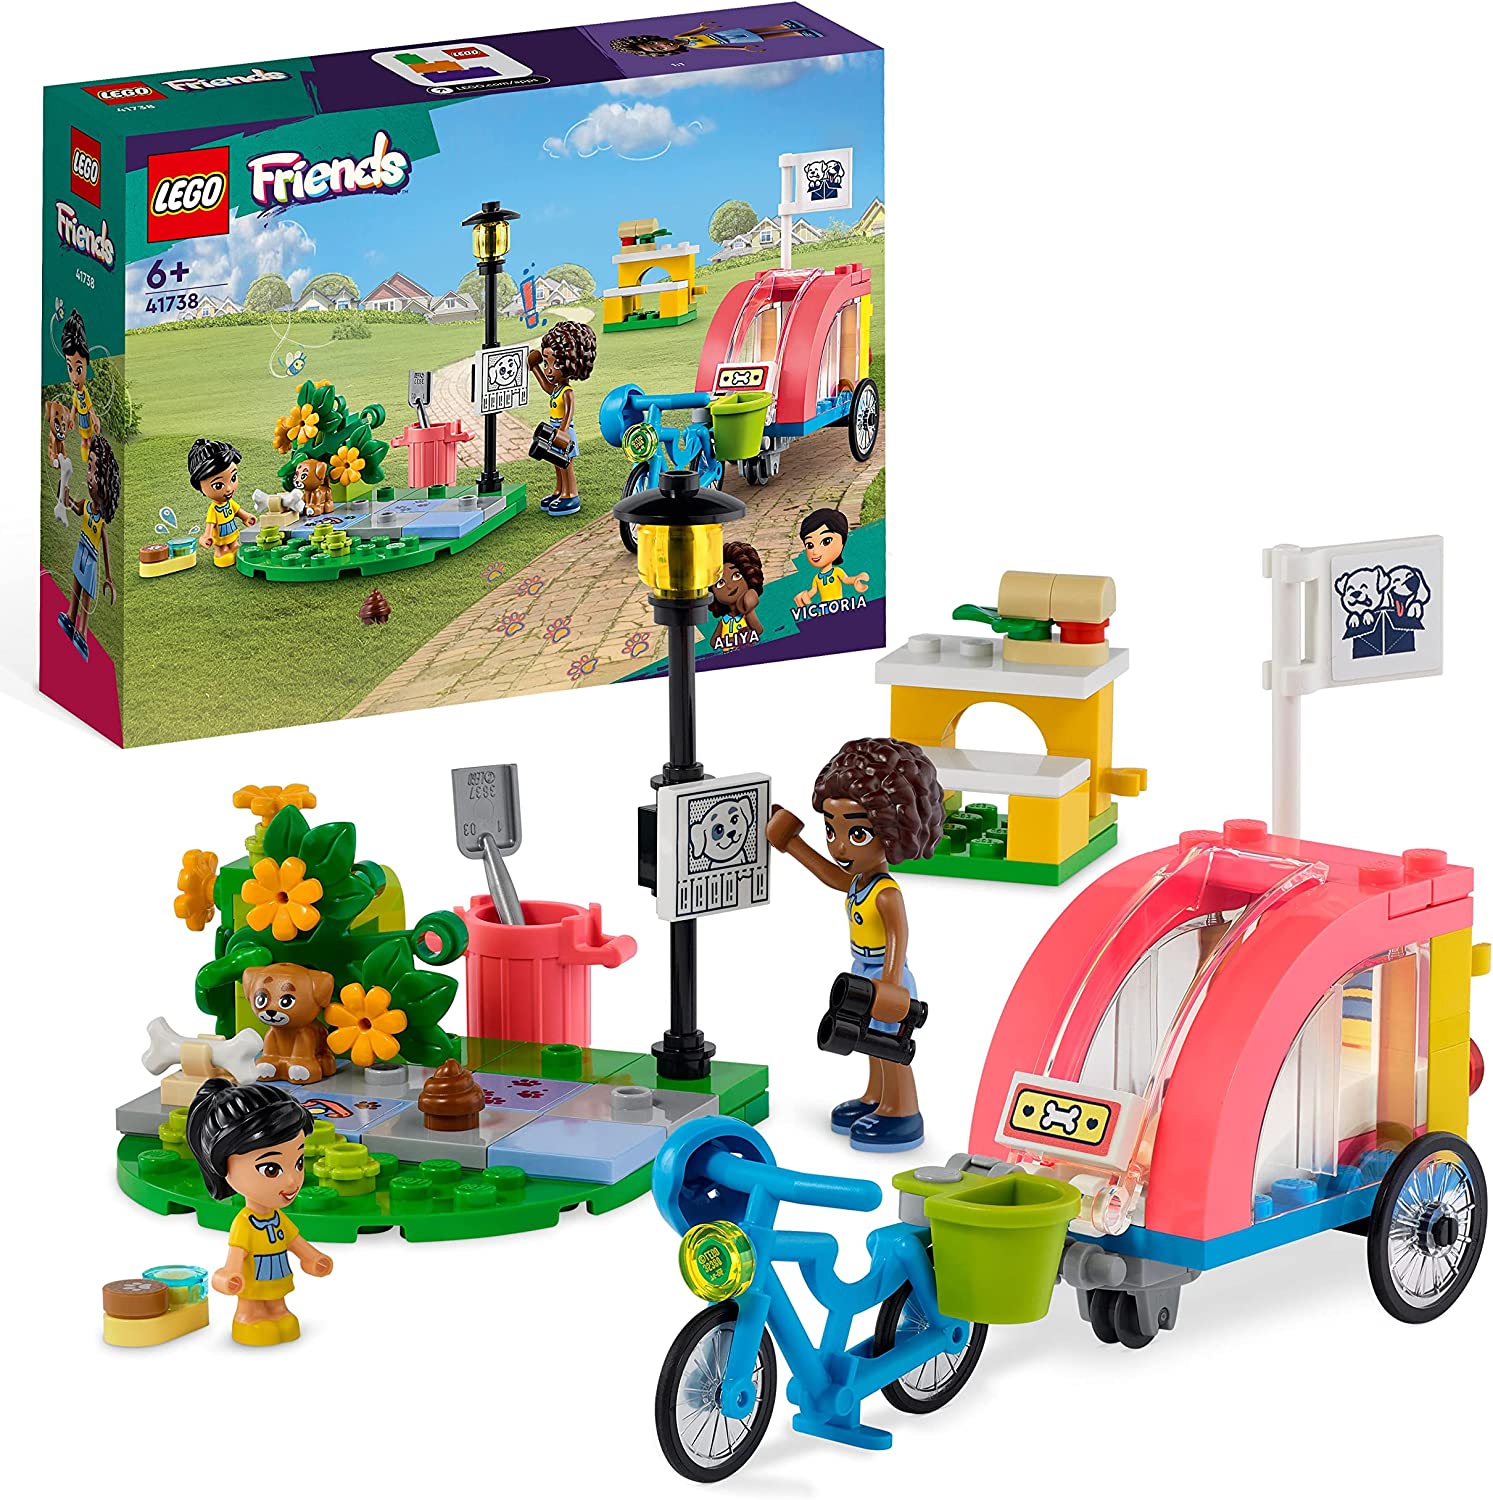 LEGO 41738 Friends Dog Rescue Bike Construction Toy 41738 (5702017415239) bērnu rotaļlieta